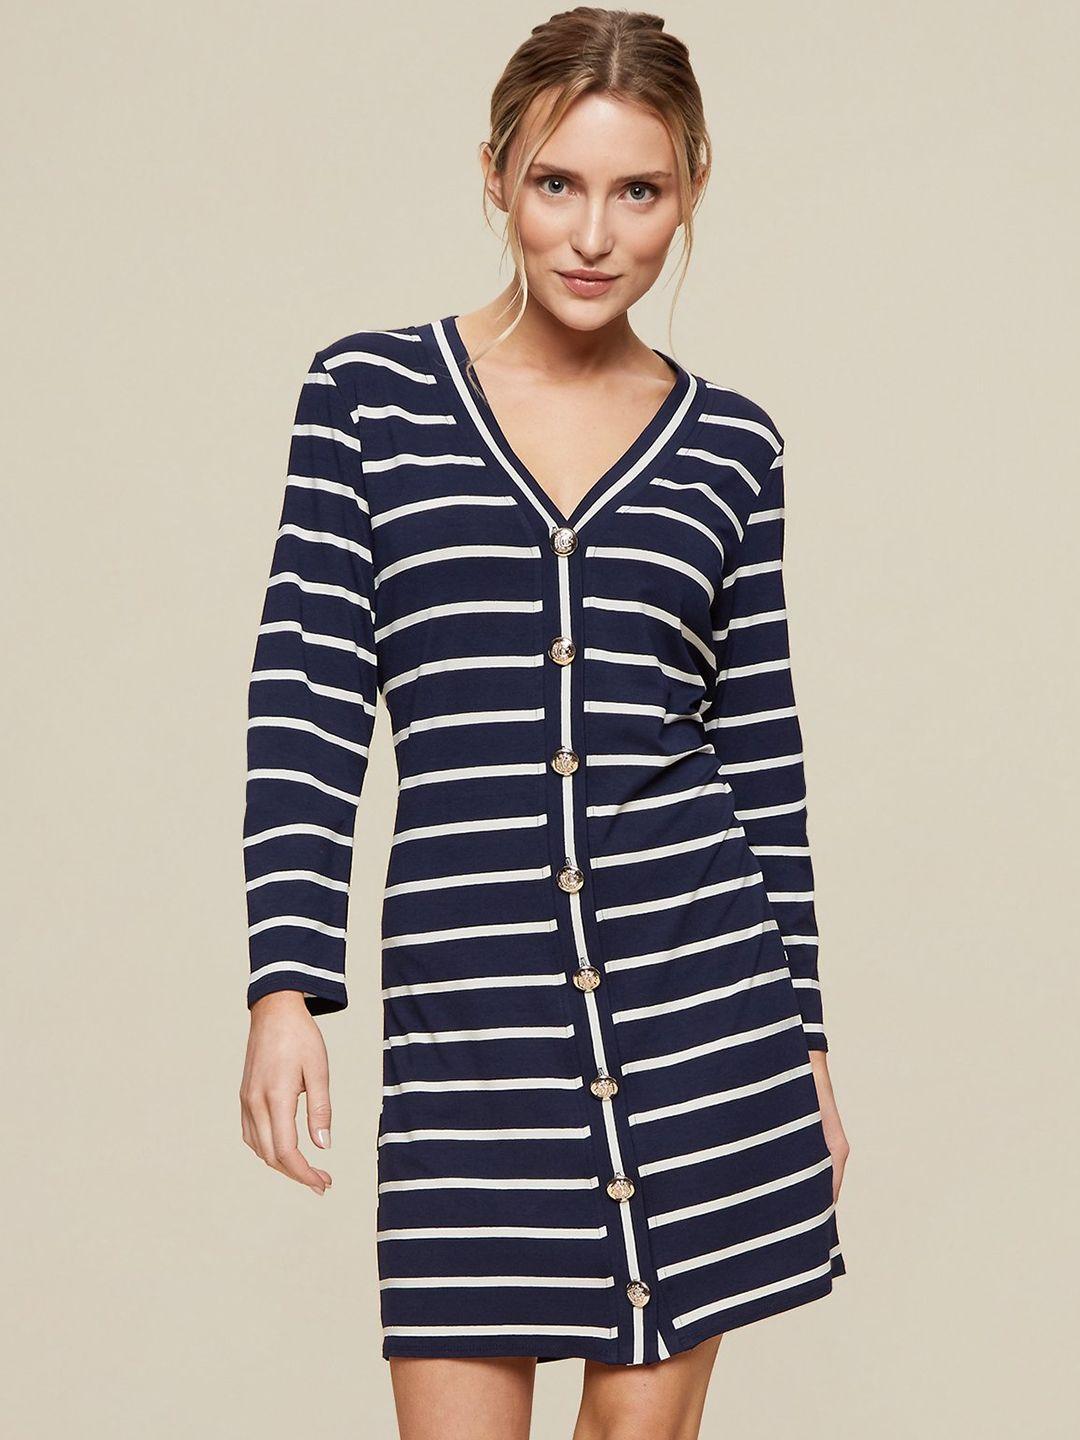 dorothy perkins women navy blue & white striped a-line dress